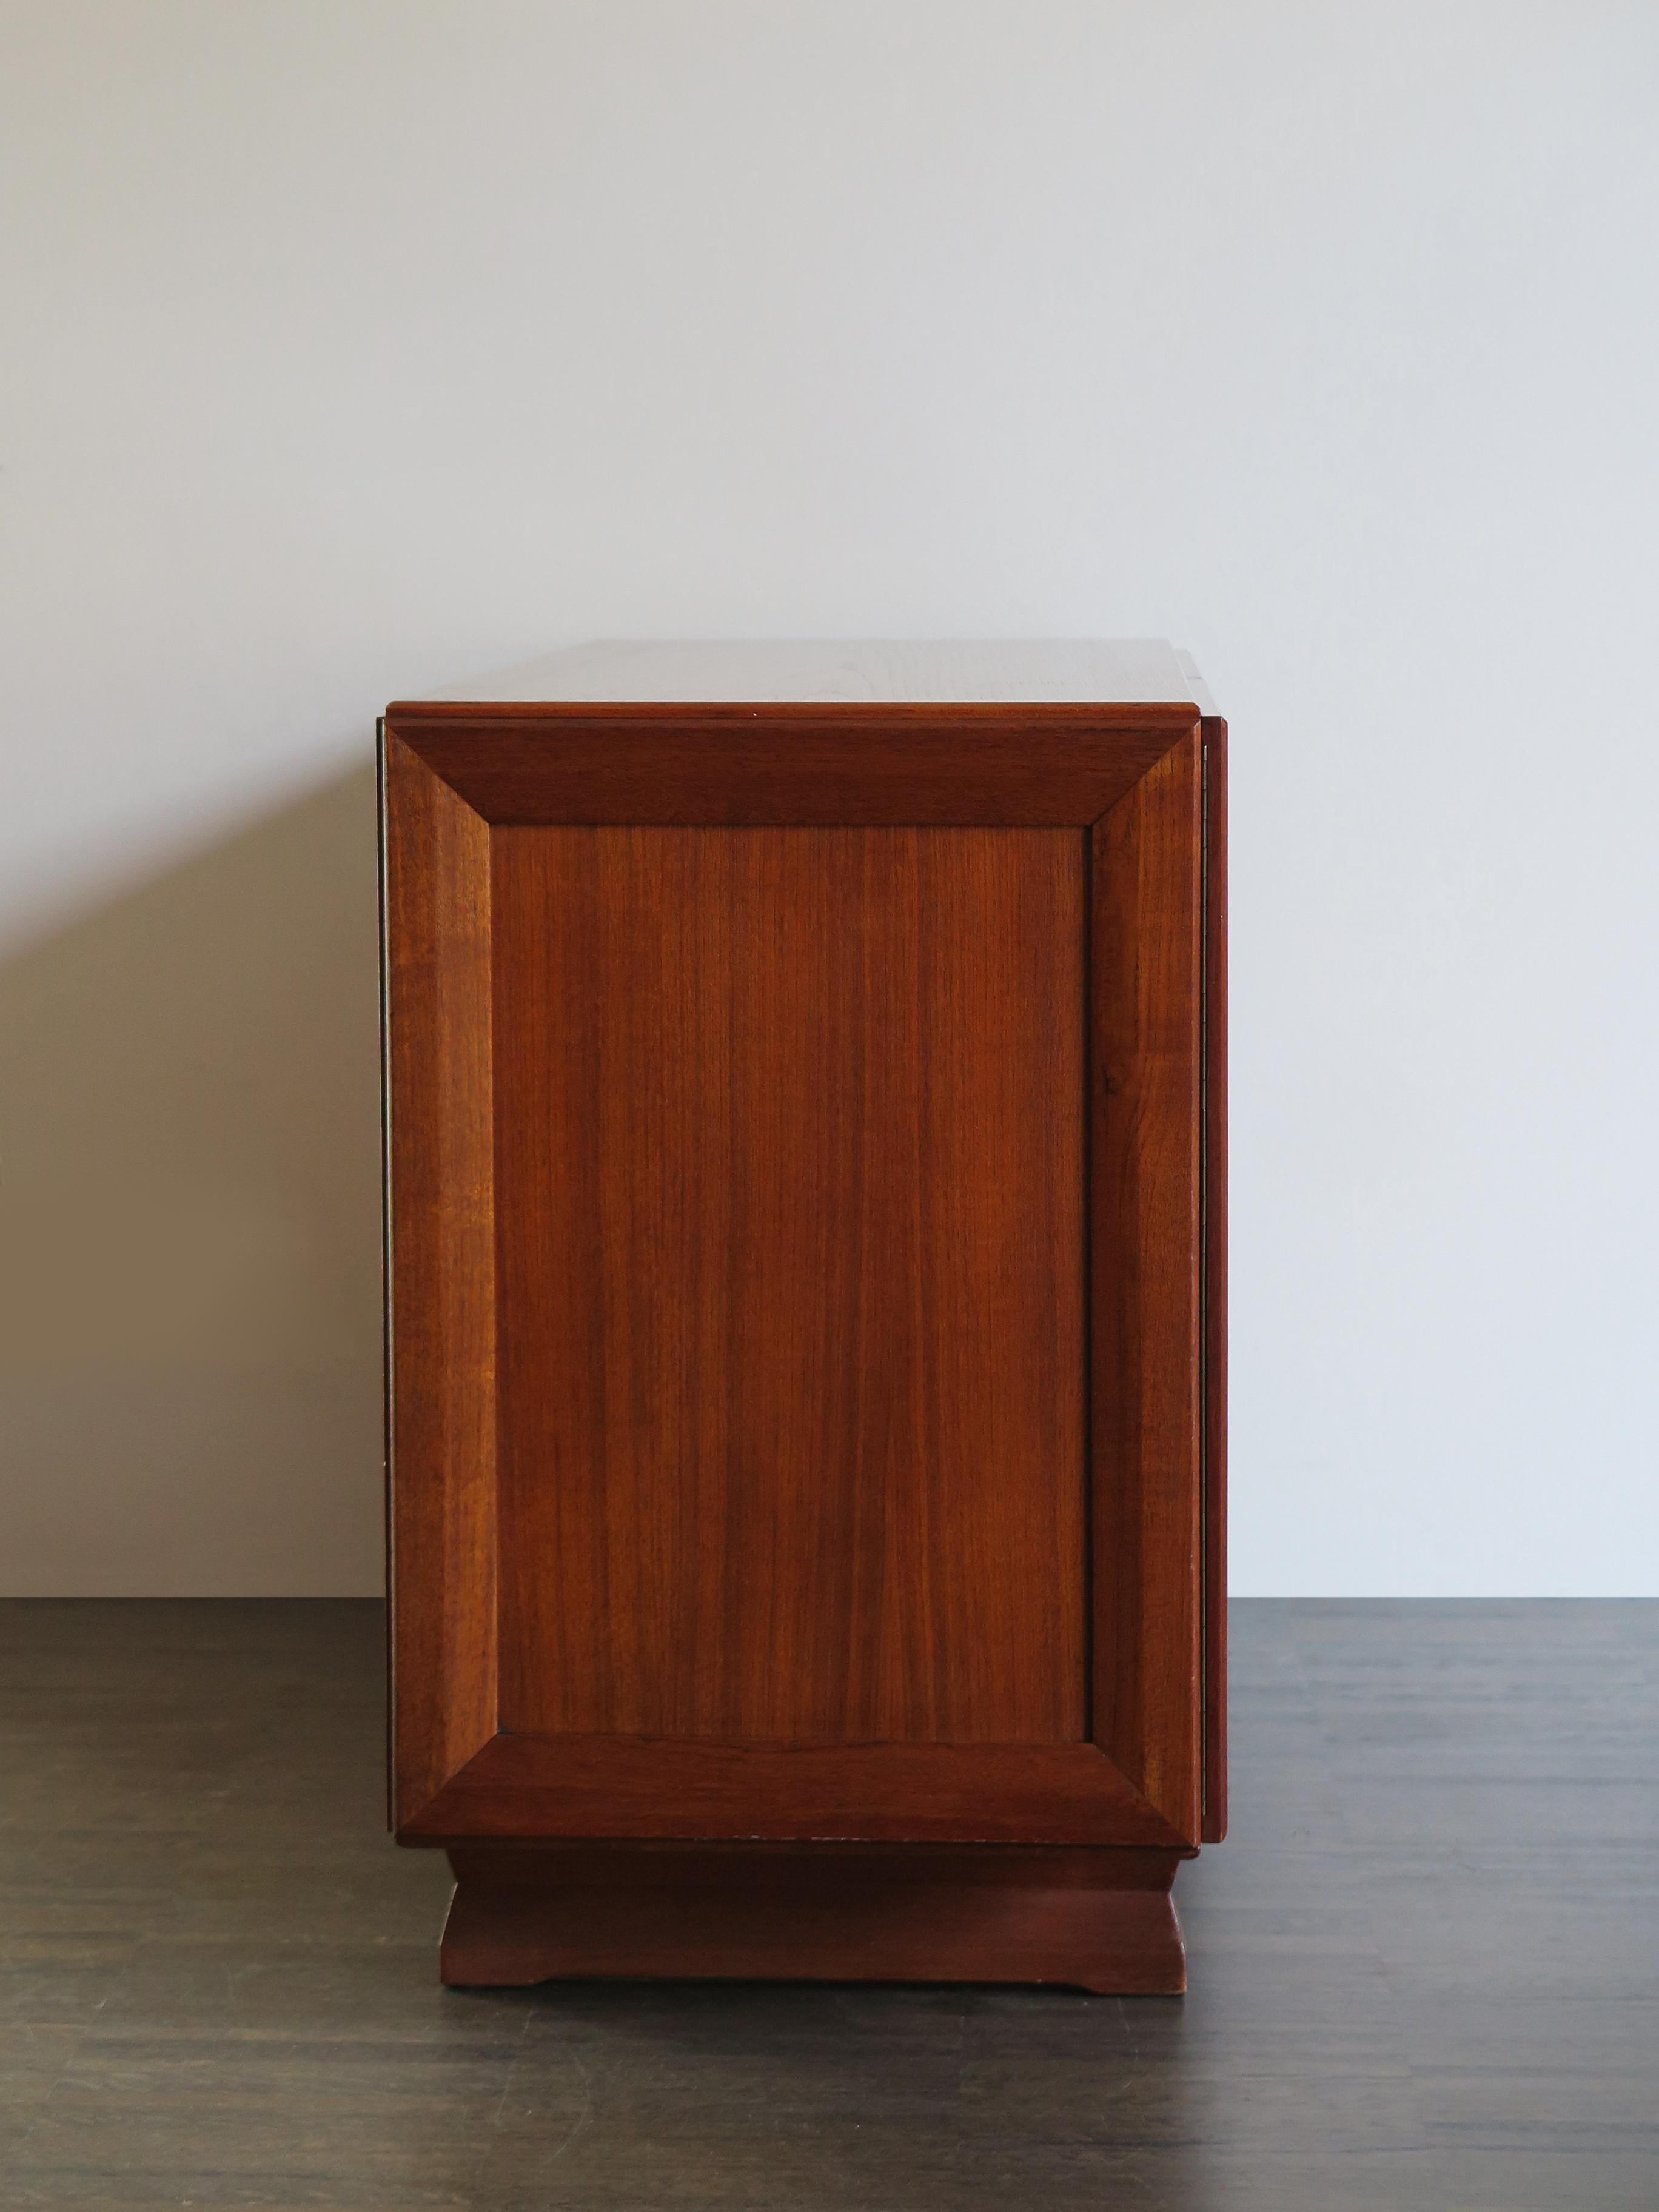 Veneer Franco Albini Italian Midcentury Wood Sideboard for Poggi, 1950s